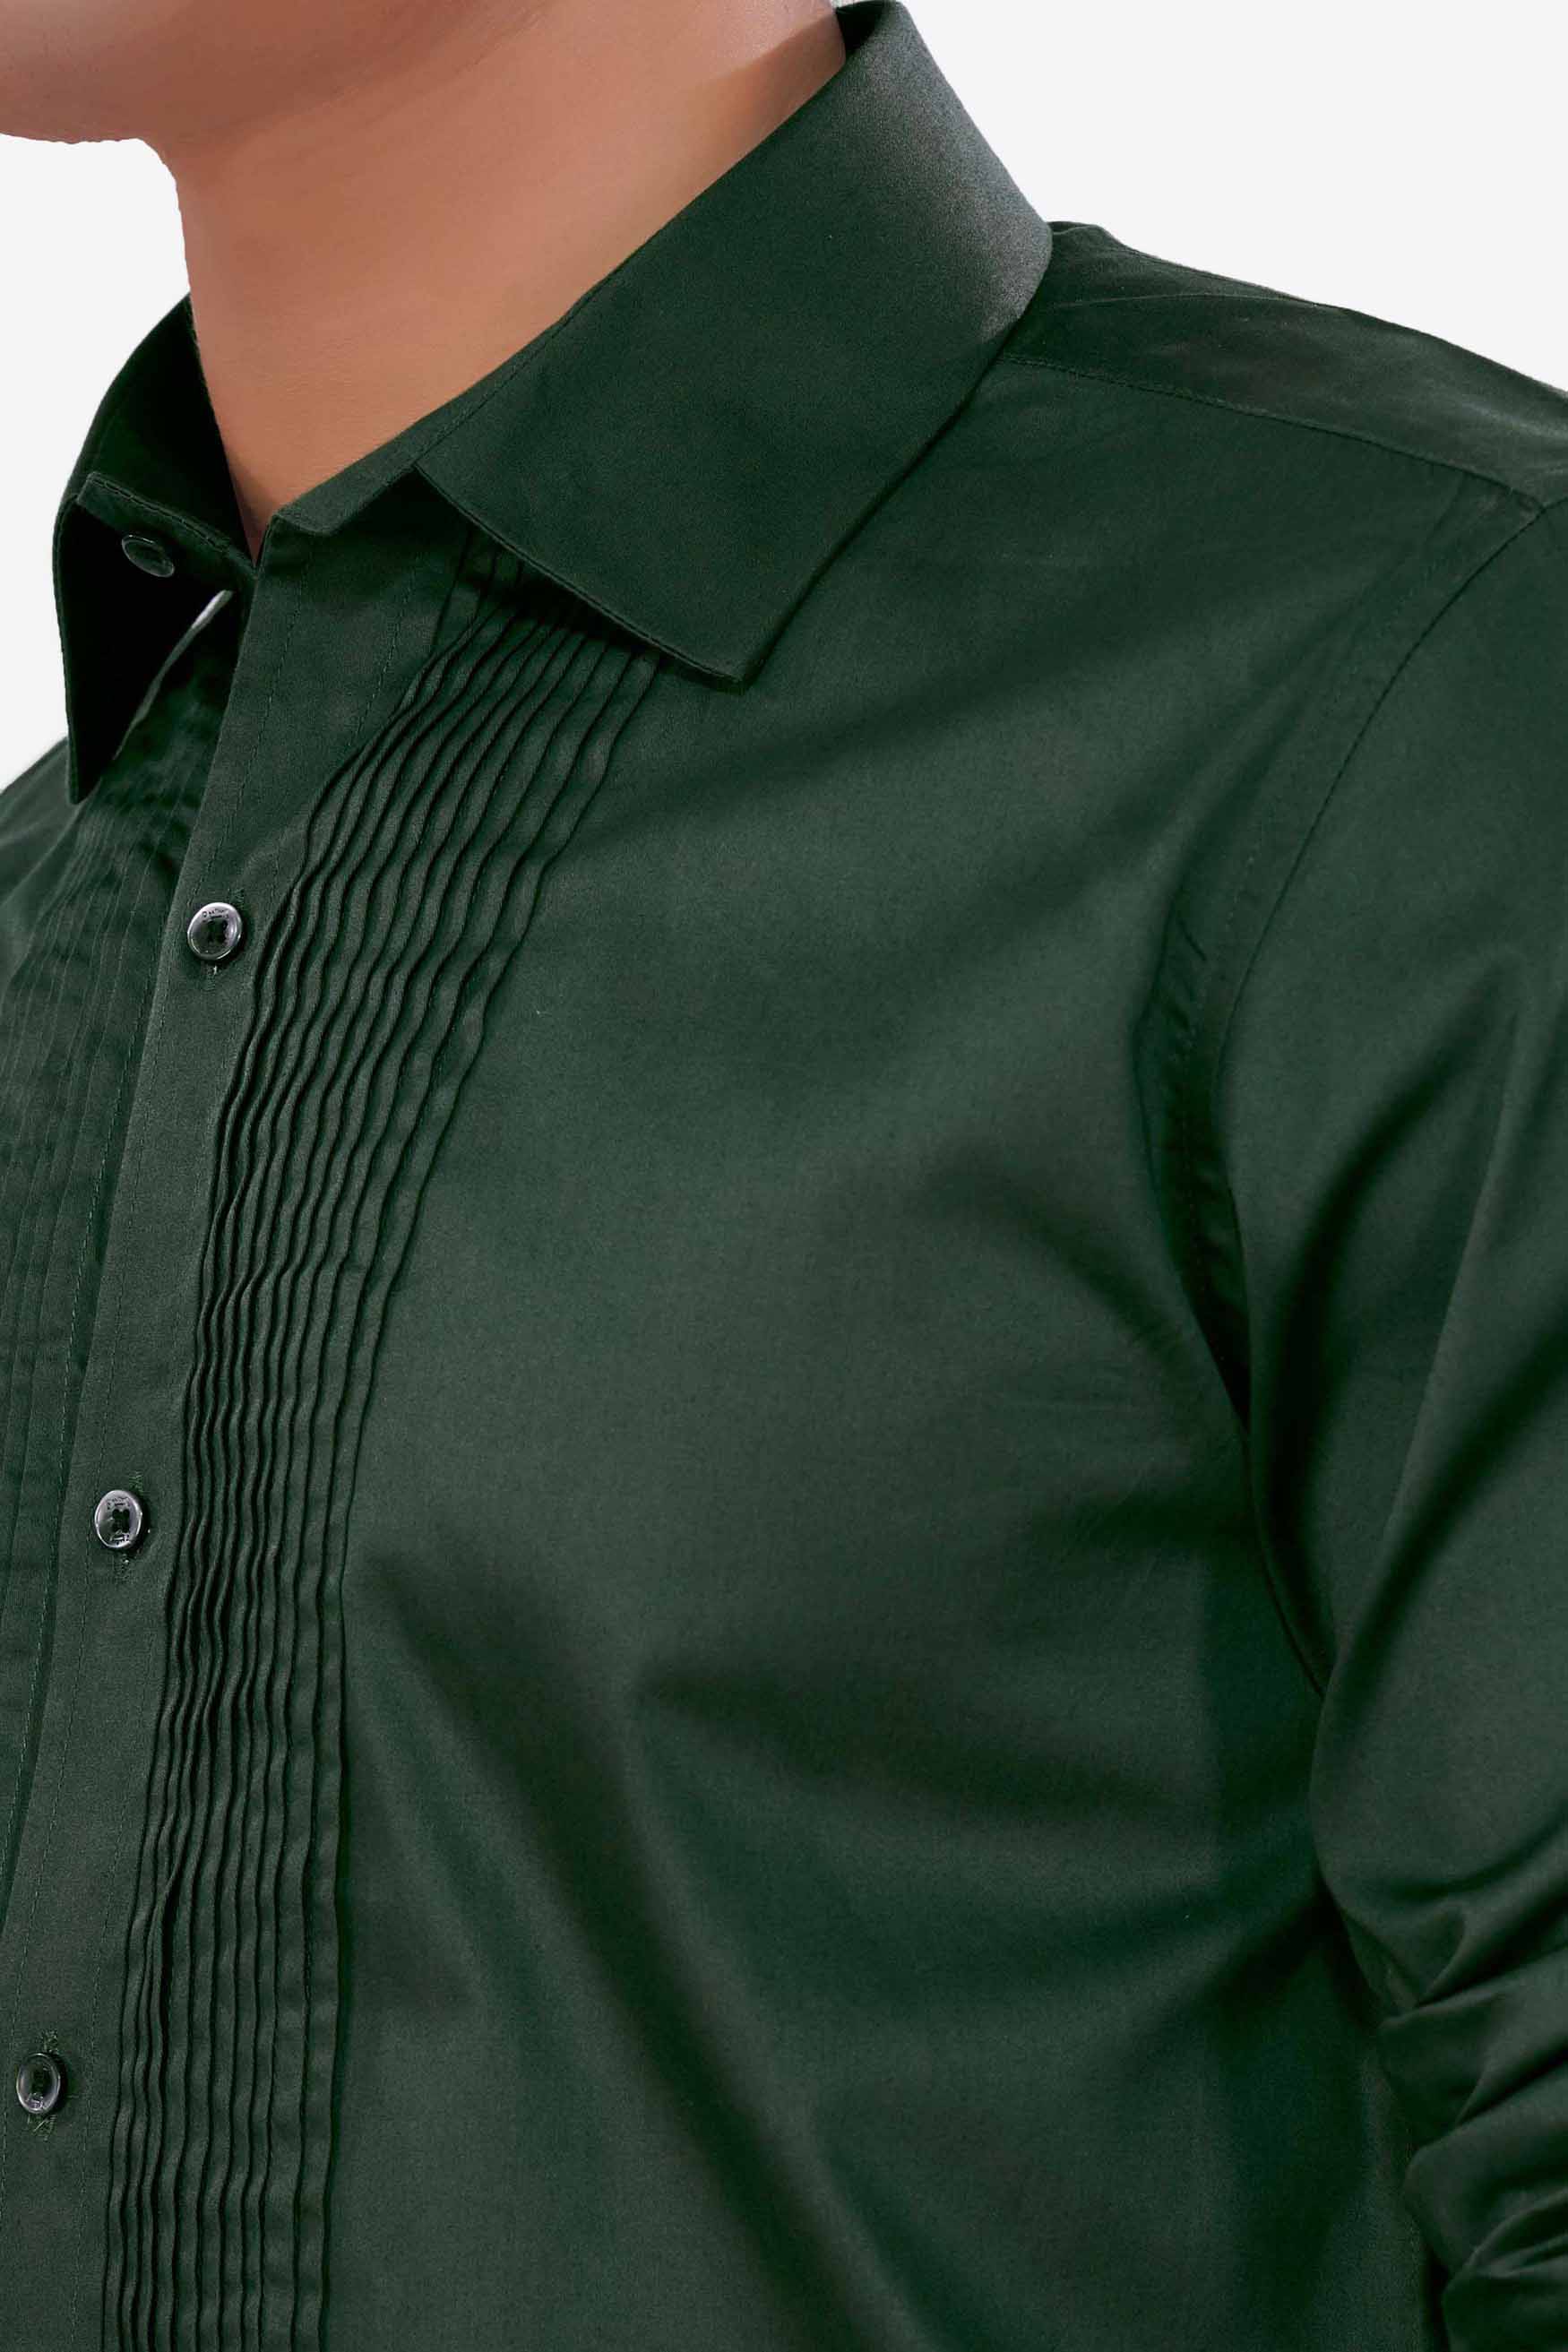 Lunar Green Subtle Sheen Super Soft Premium Cotton Tuxedo Shirt